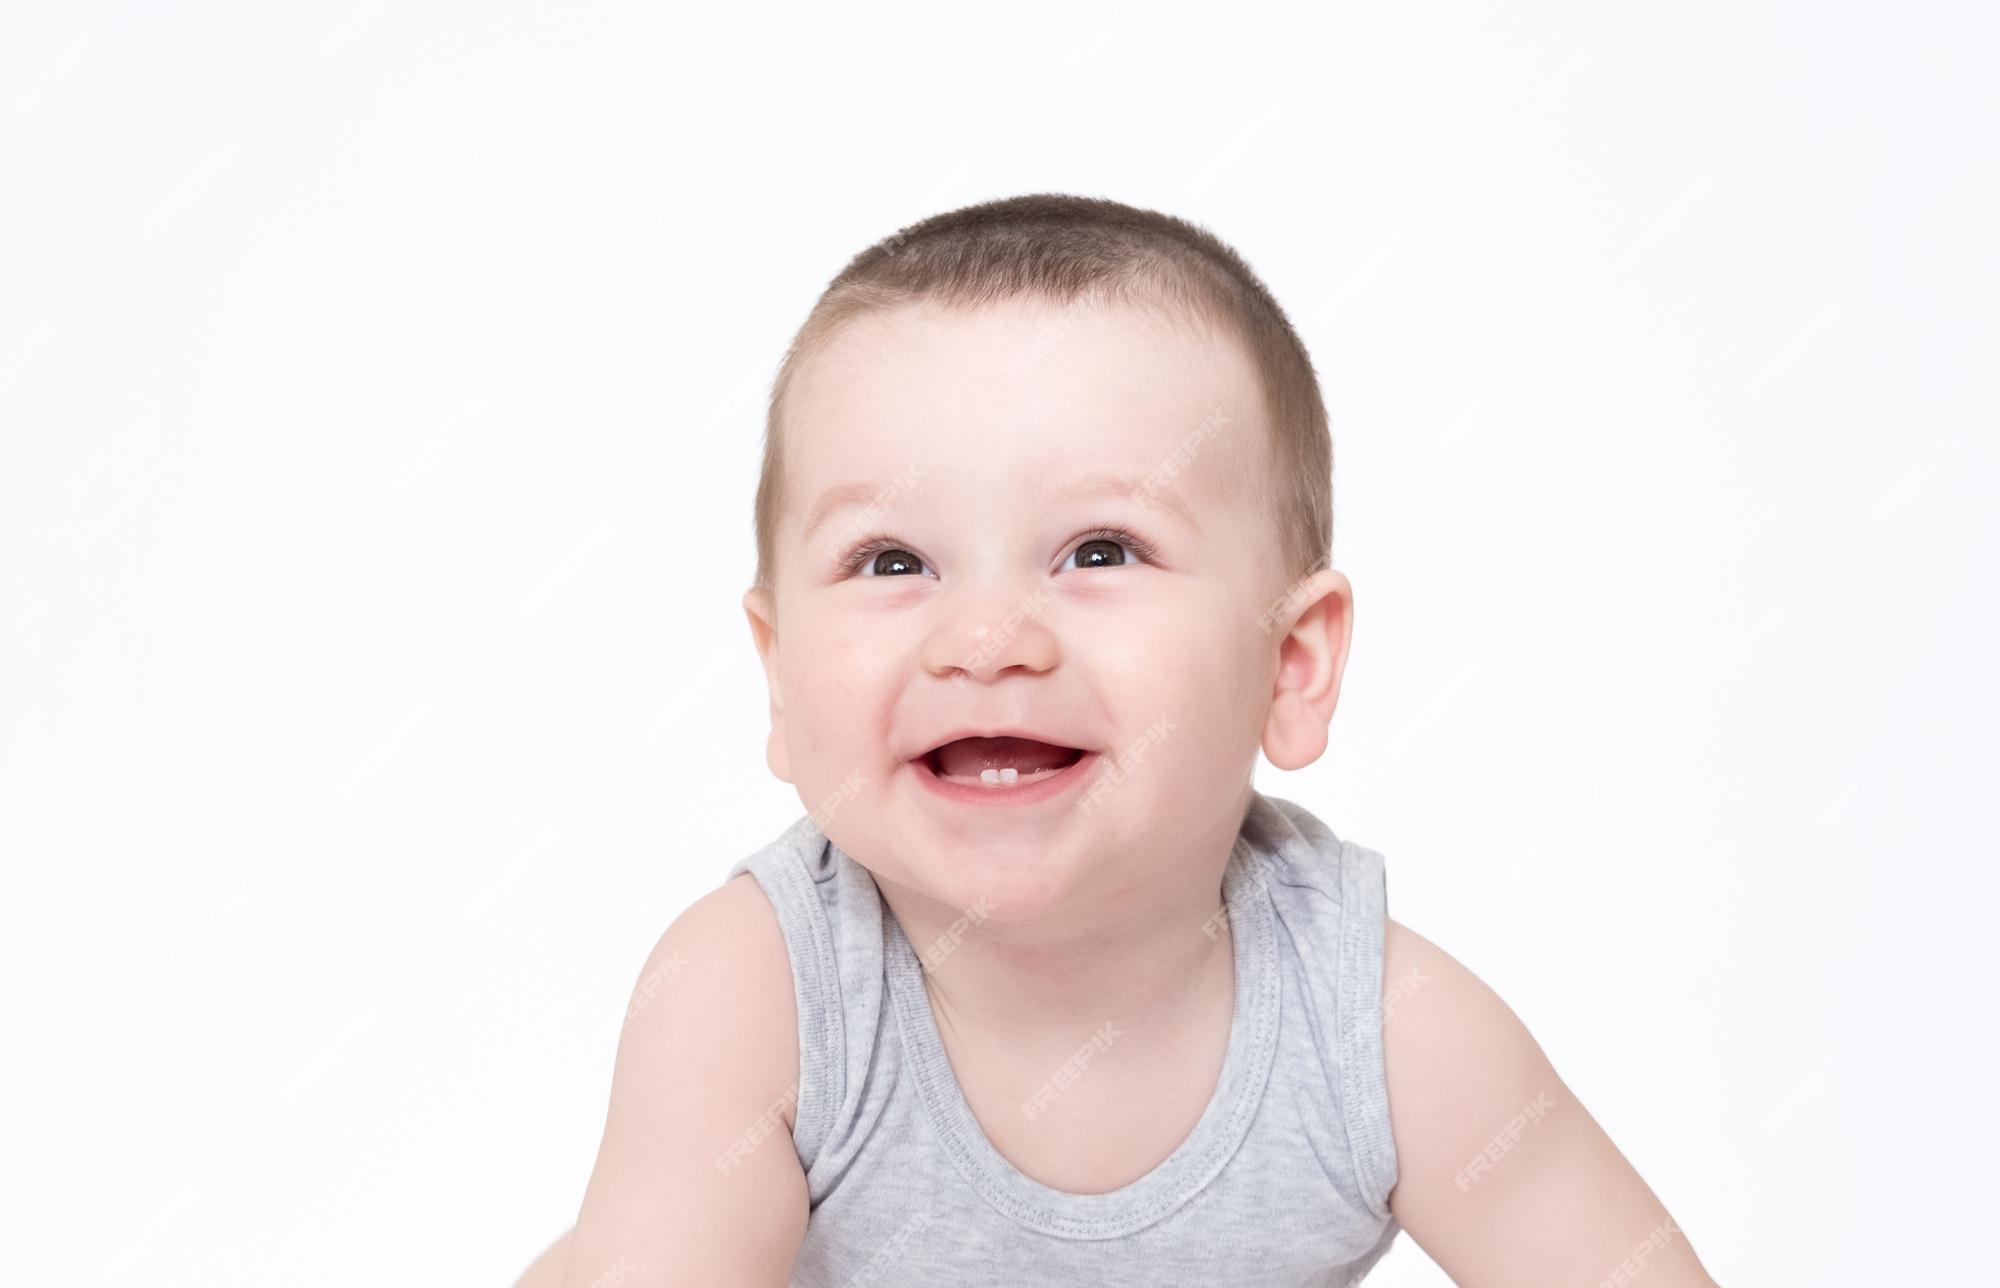 Premium Photo Image Of Cute Baby Boy Closeup Portrait